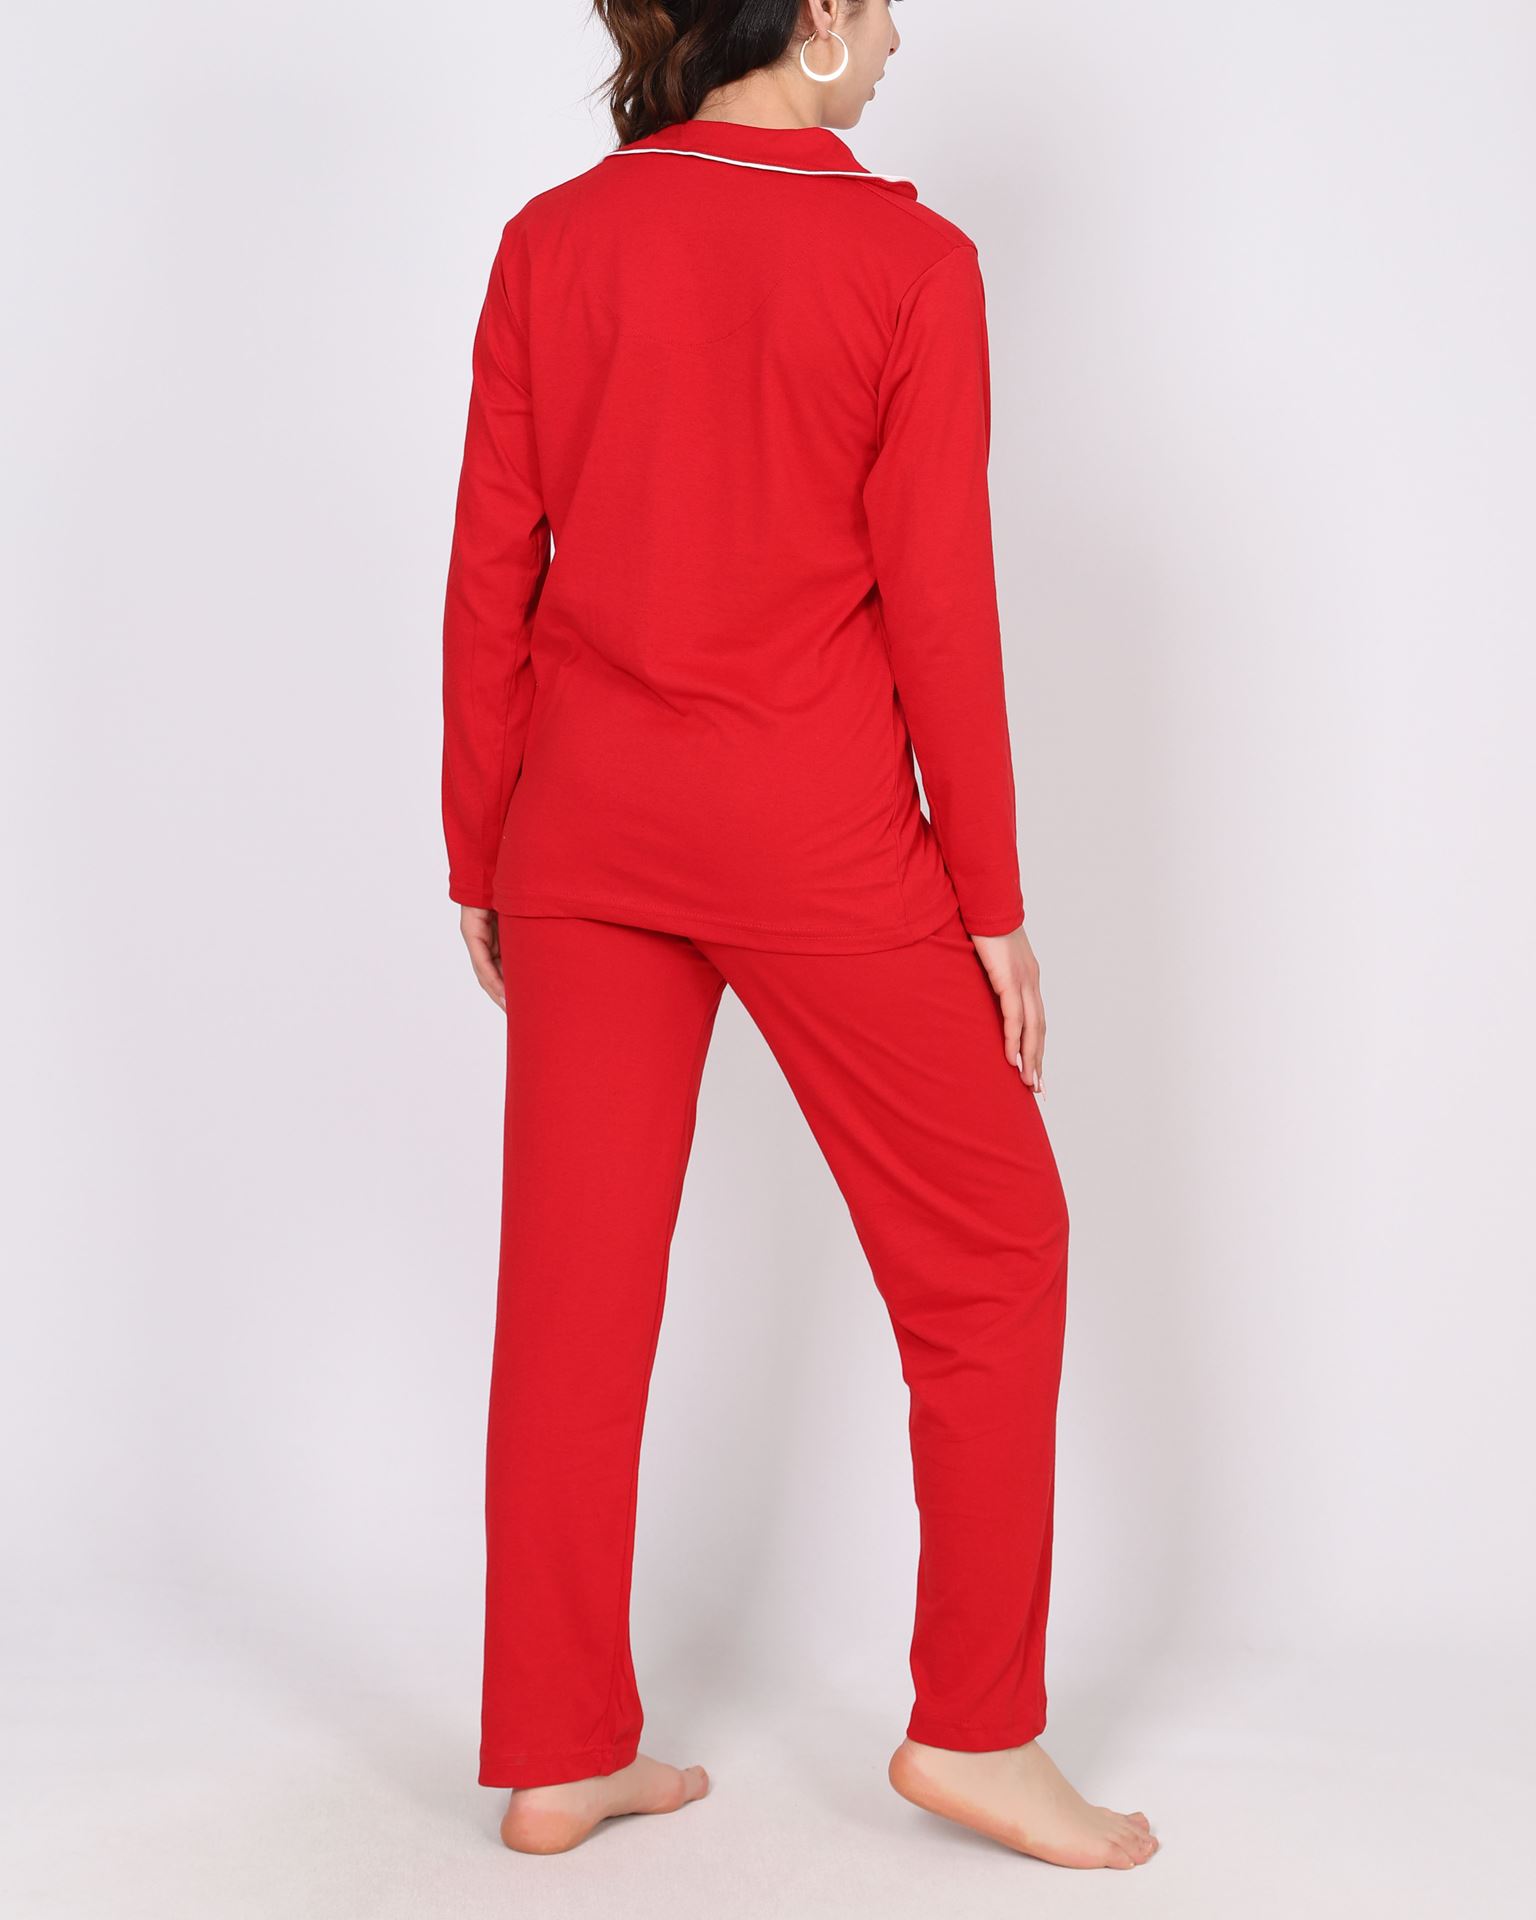 Kırmızı Düğmeli Pijama Takımı PJM1880